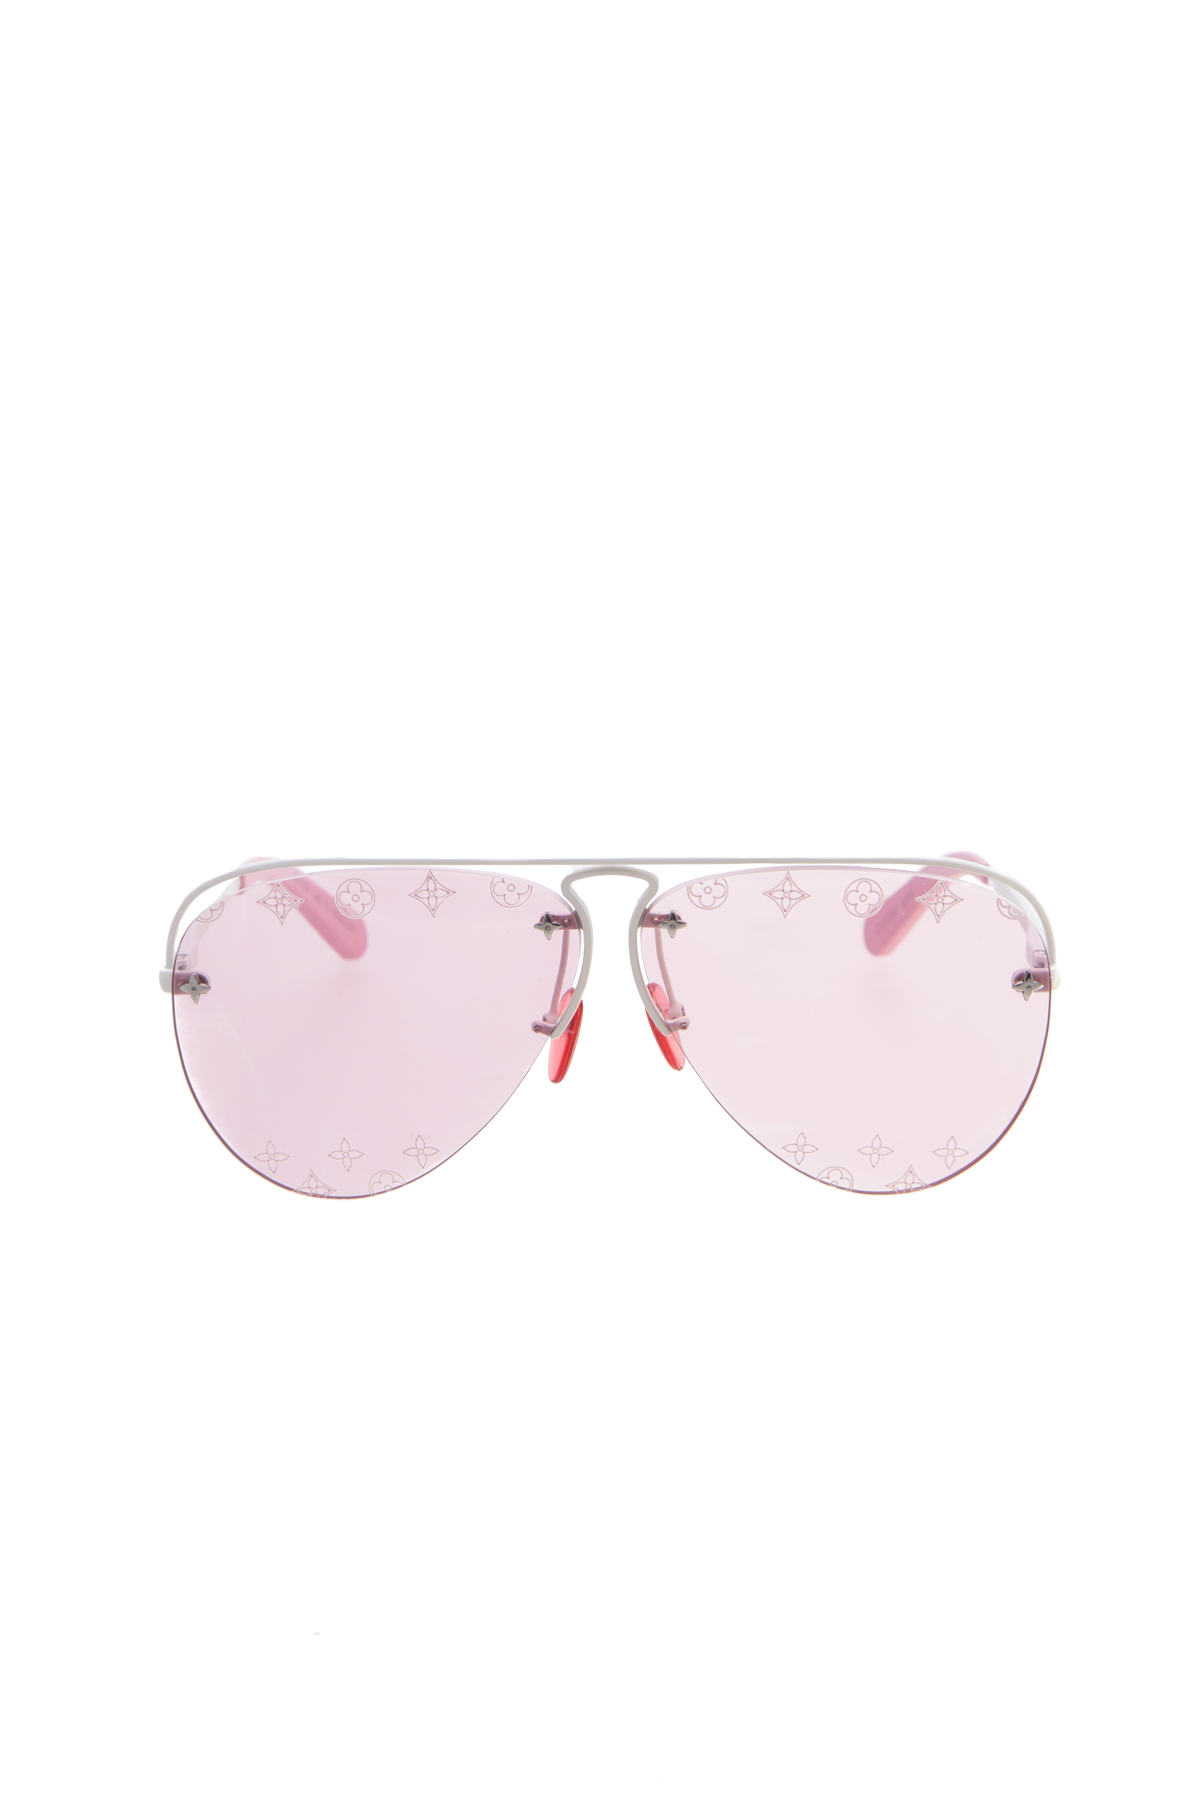 Louis Vuitton Grease Monogram Sunglasses